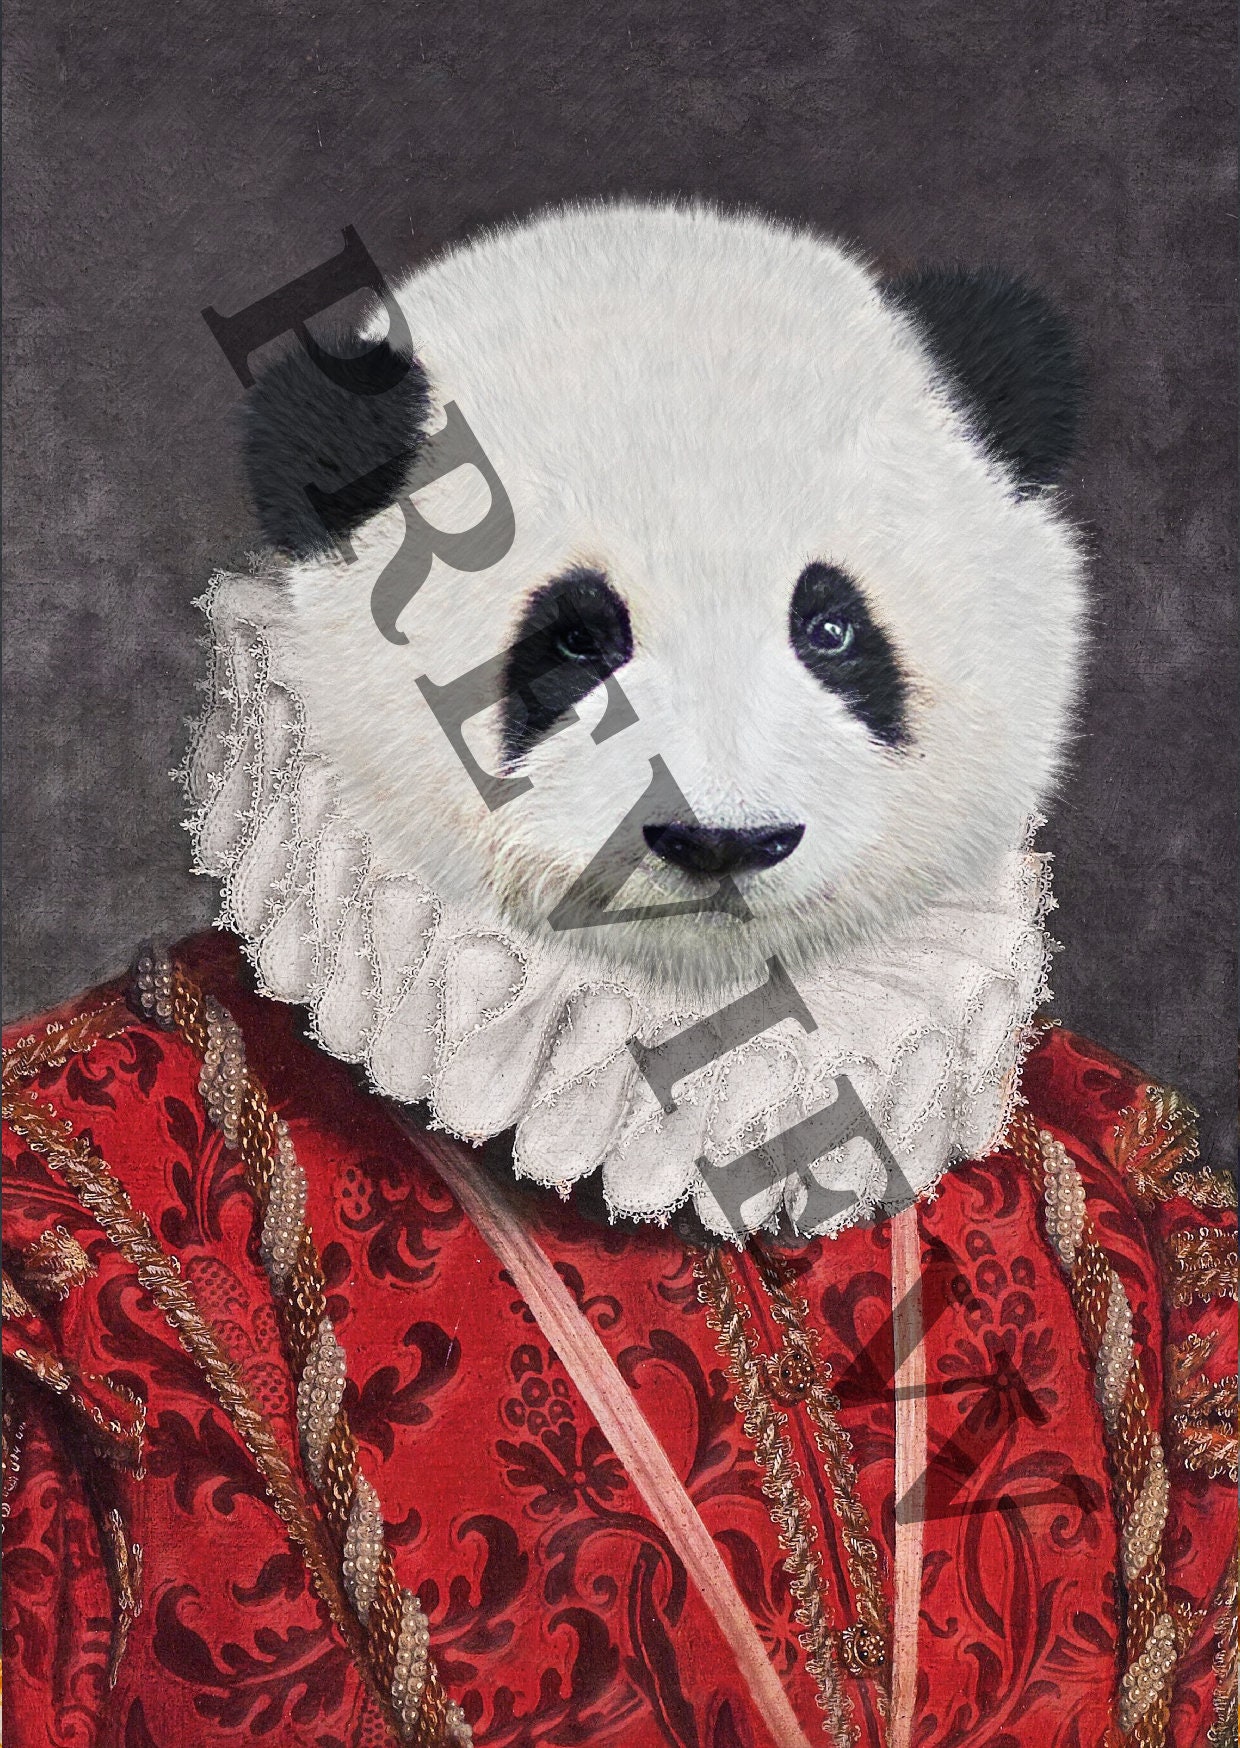 Aristocratic Panda Poster - Renaissance Print - Portrait Art - Panda Art -  Gift for Him, Her & Animal Lover - Funny Decor for Living Room, Bedroom or